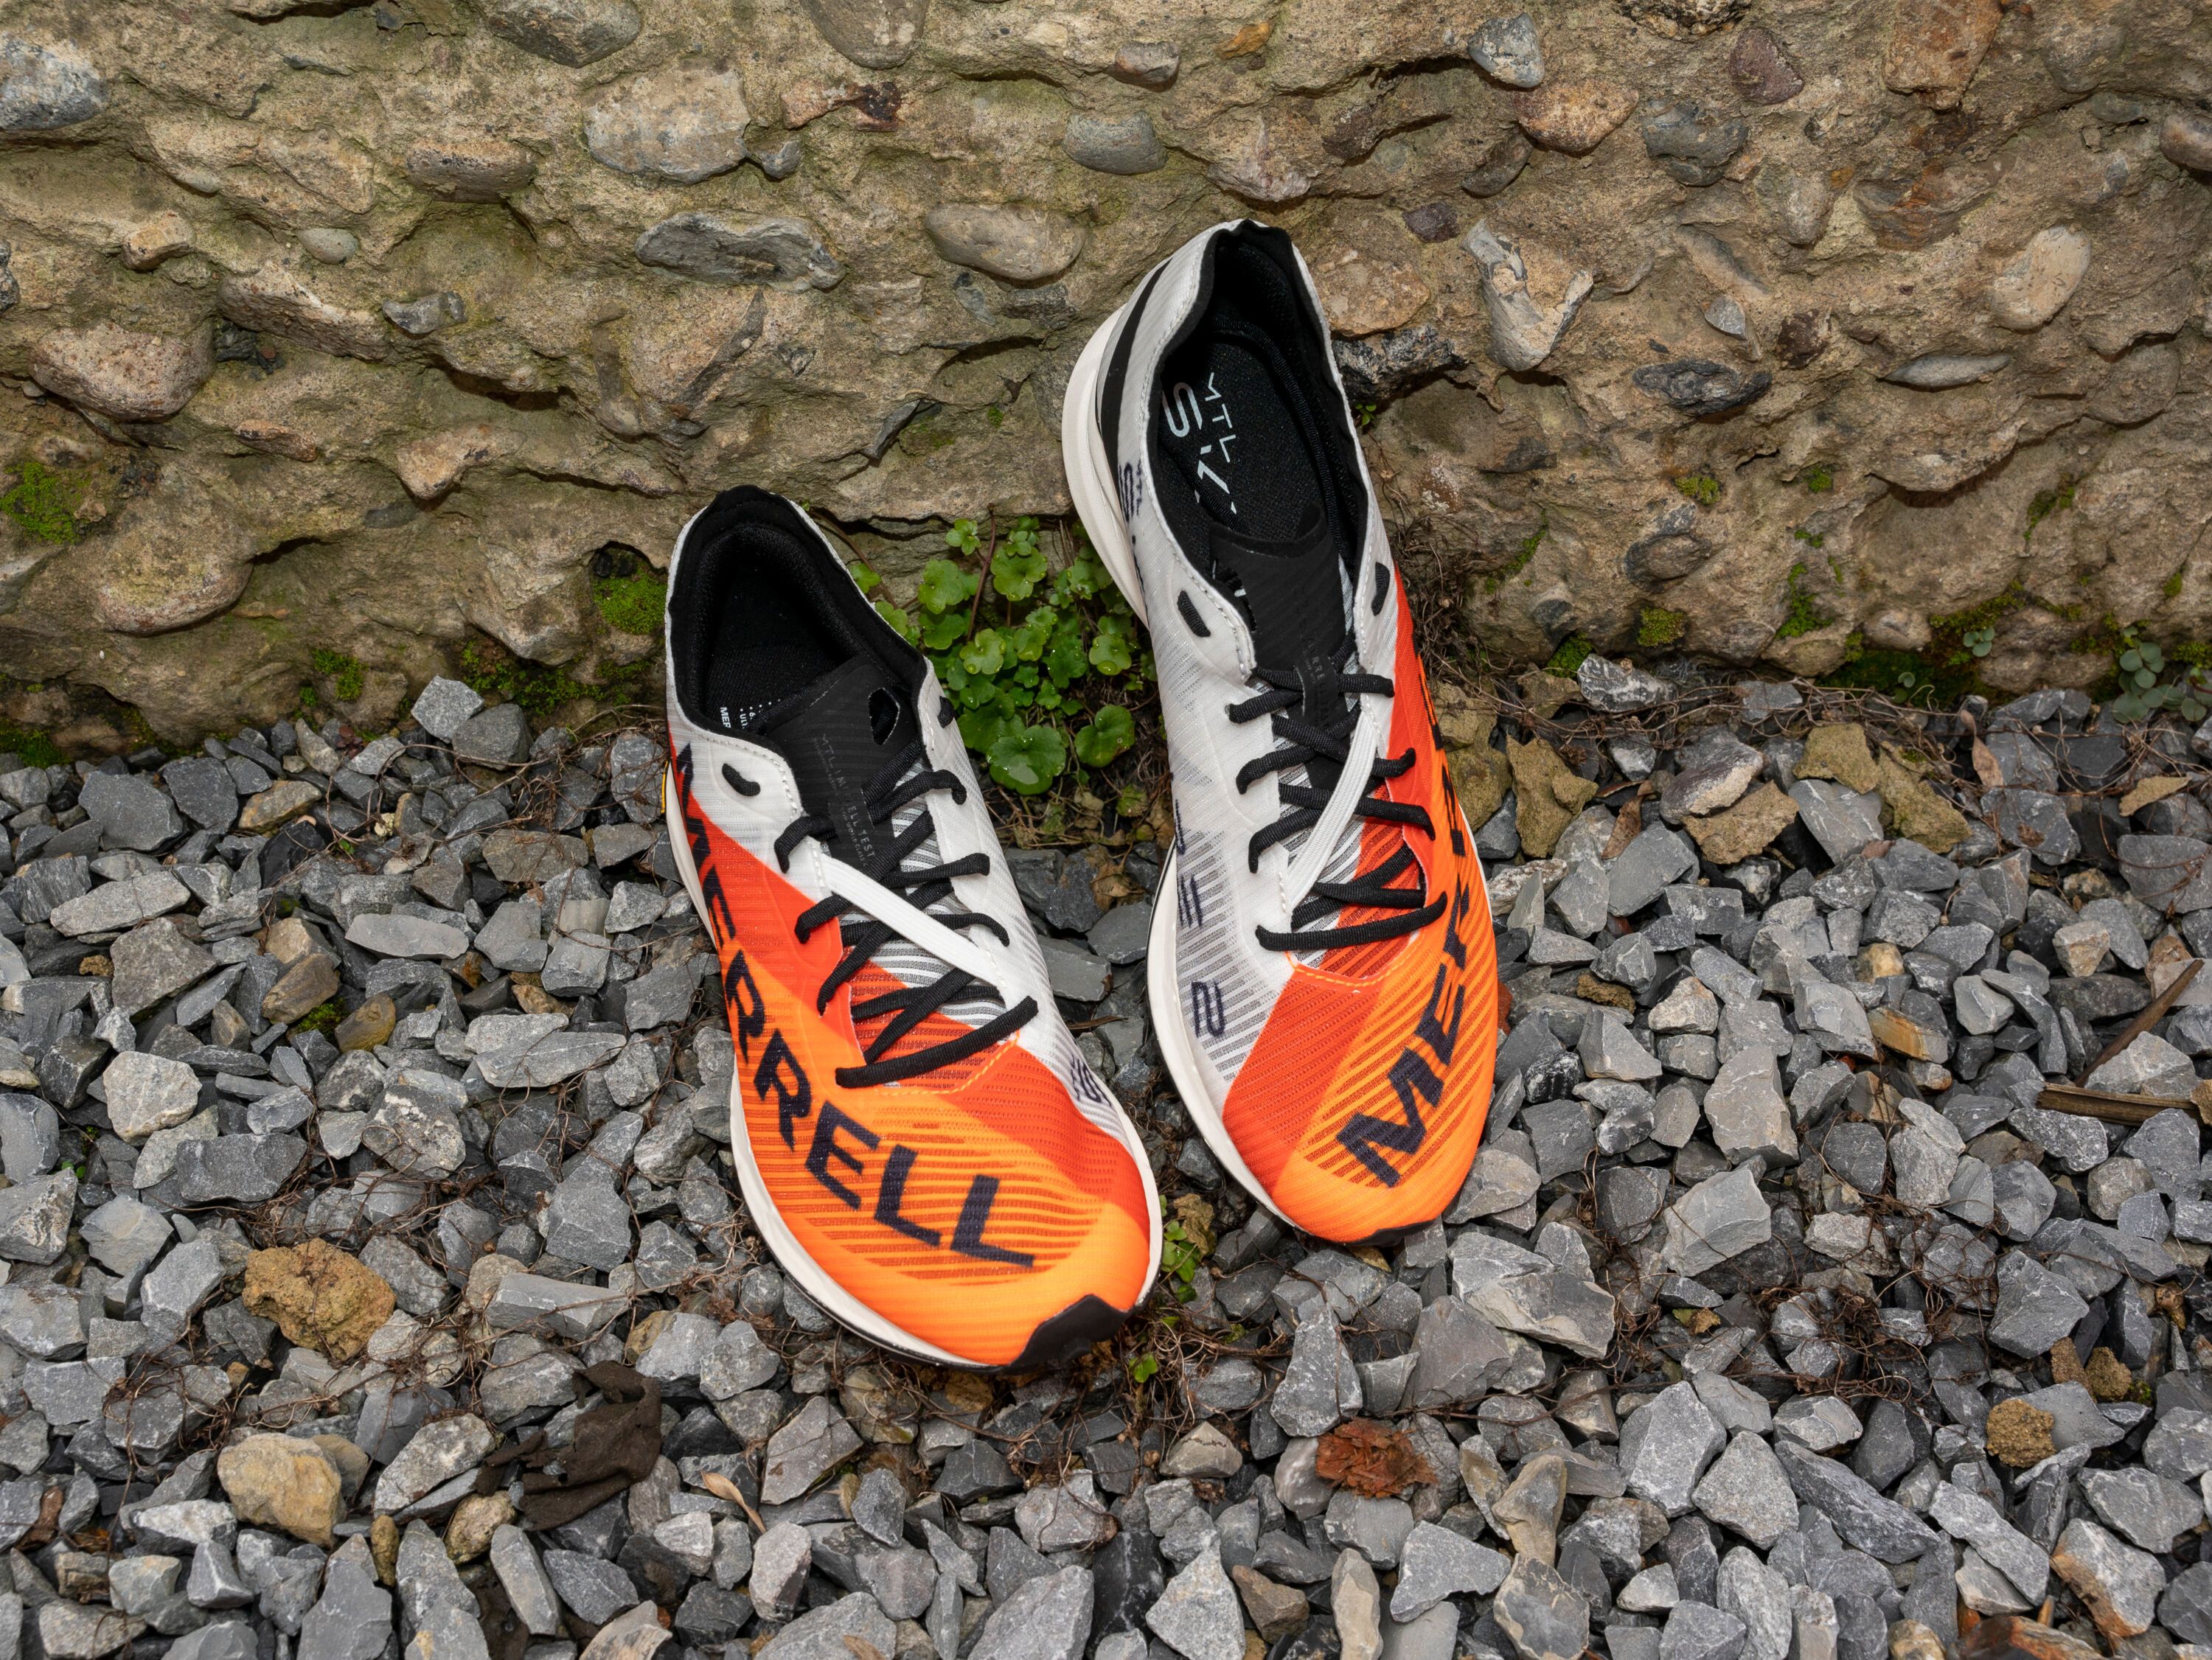 Merrell MTL Skyfire 2 Review | Best Trail Running Shoes 2023